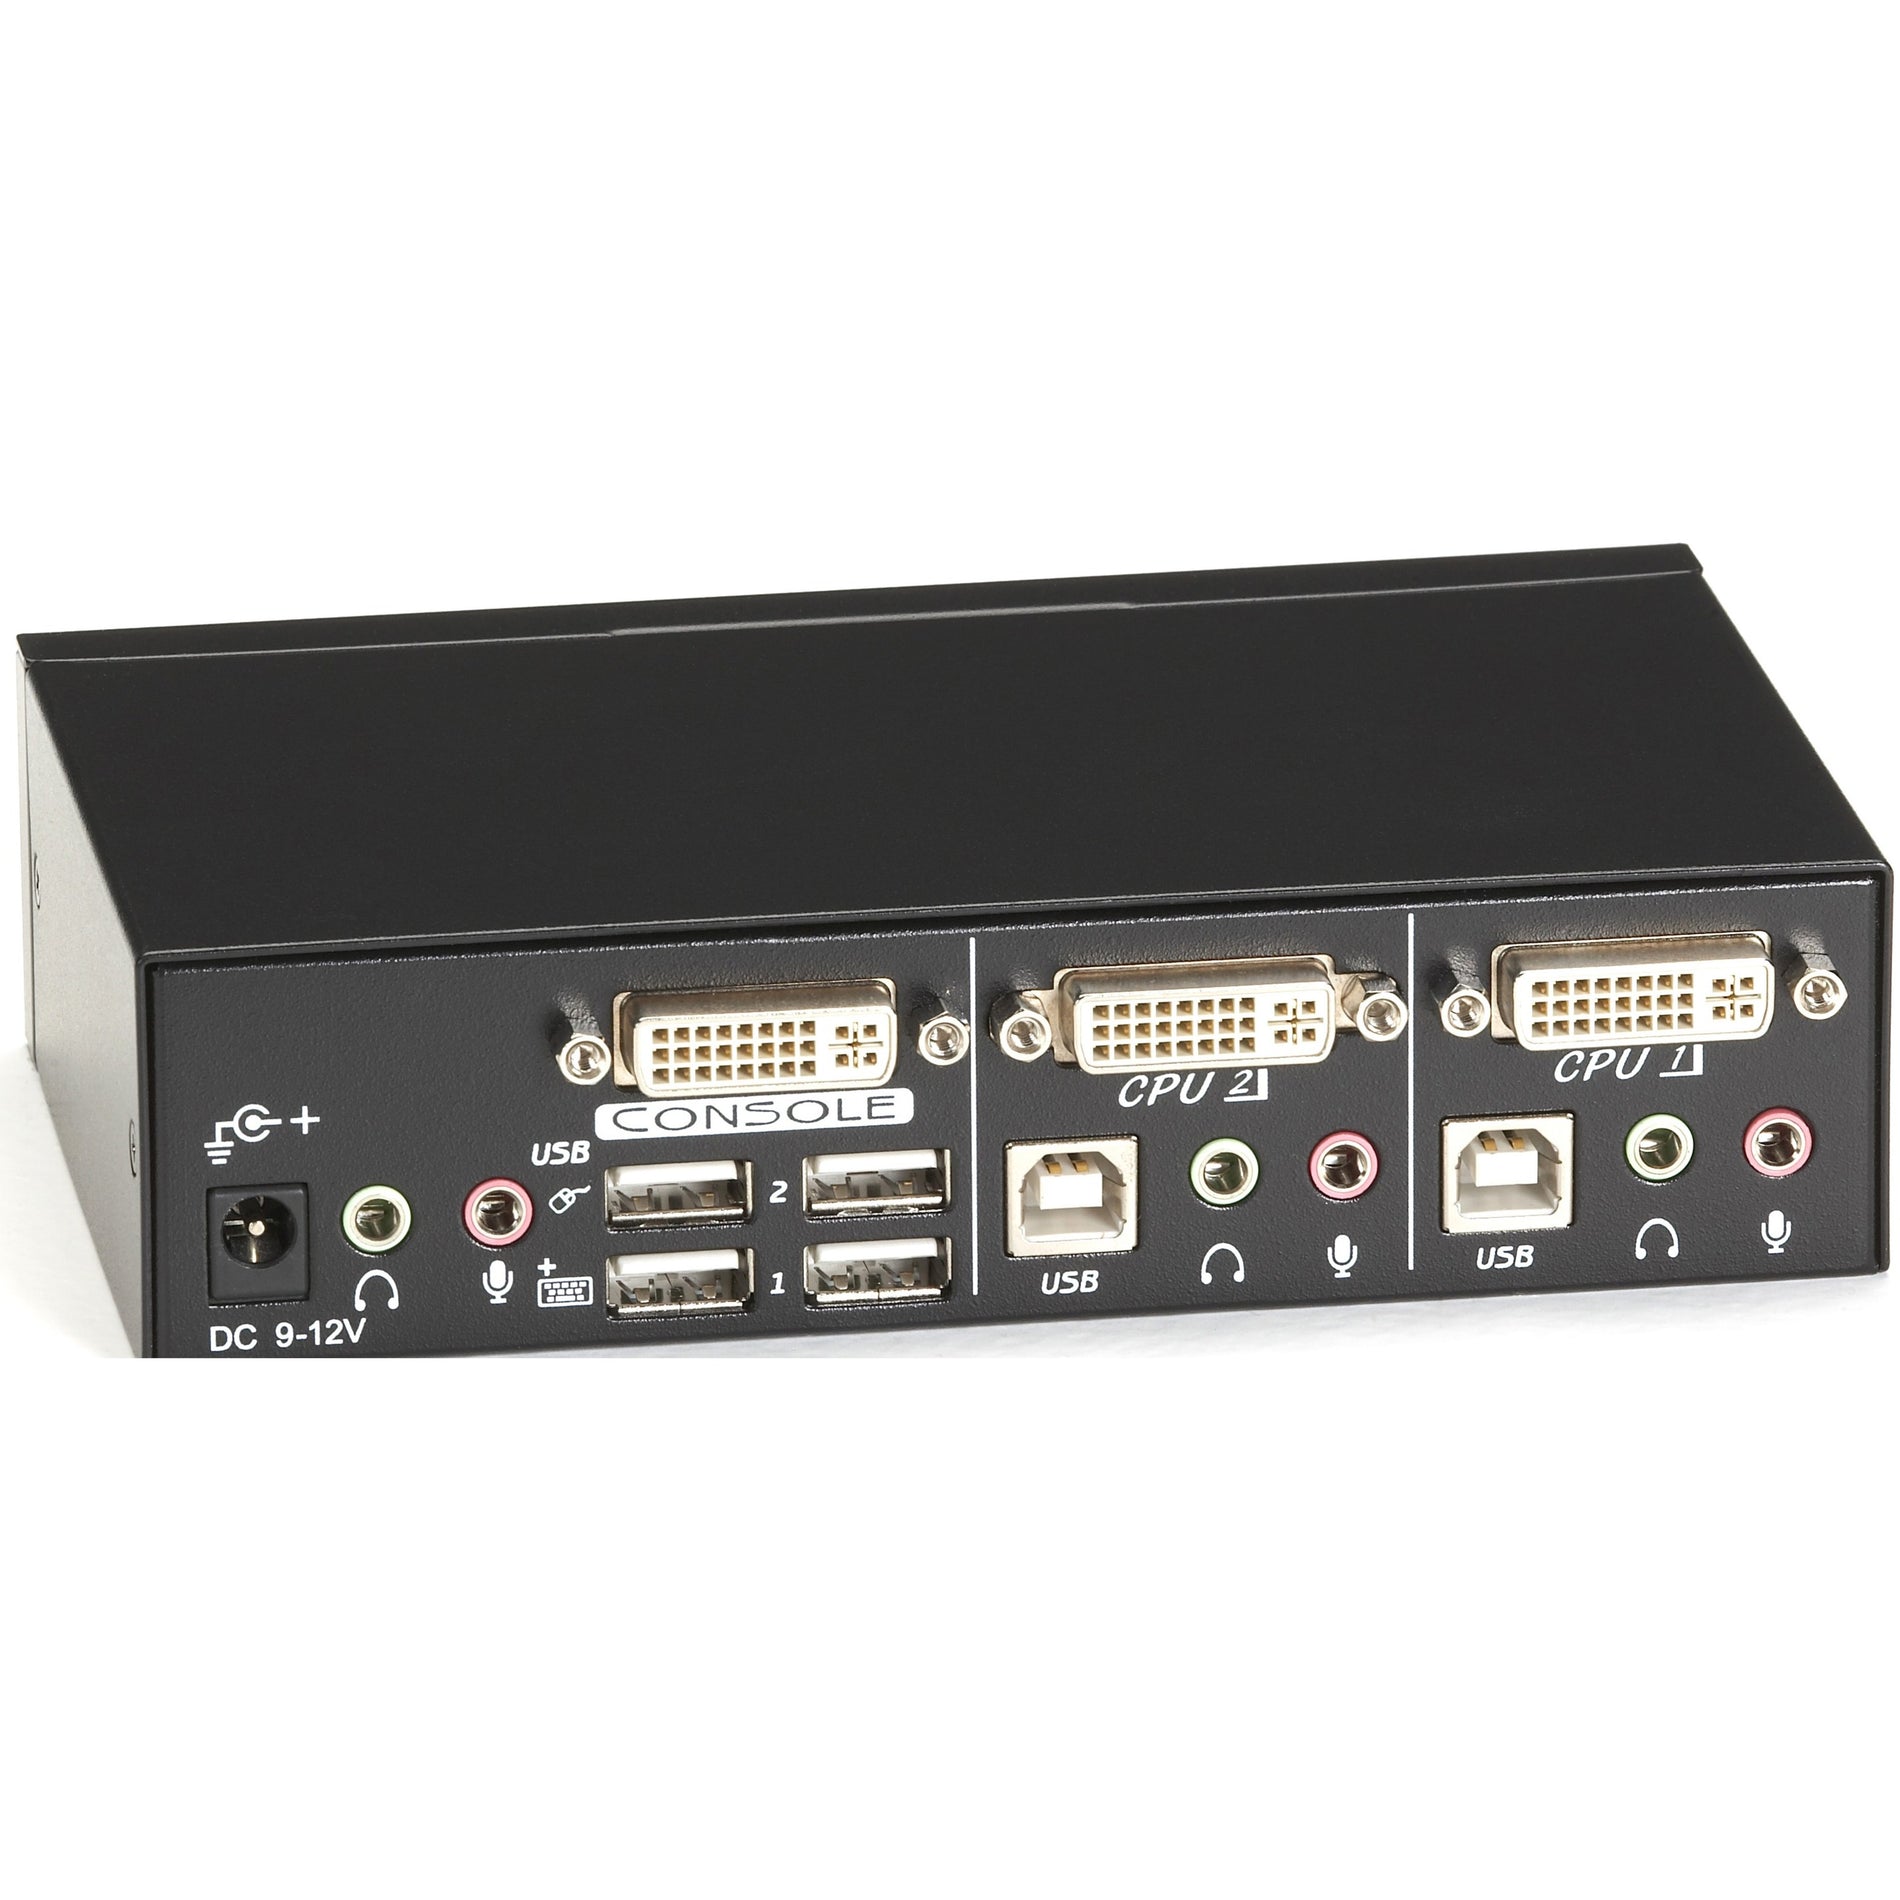 Black Box KV9612A ServSwitch DT DVI 2-Port with Emulated USB Keyboard/Mouse WUXGA 1920 x 1200 1 Year Warranty  フブラックボックス KV9612A ServSwitch DT DVI 2-Port with エミュレートされた USB キーボード/マウス、WUXGA、1920 x 1200、1年保証